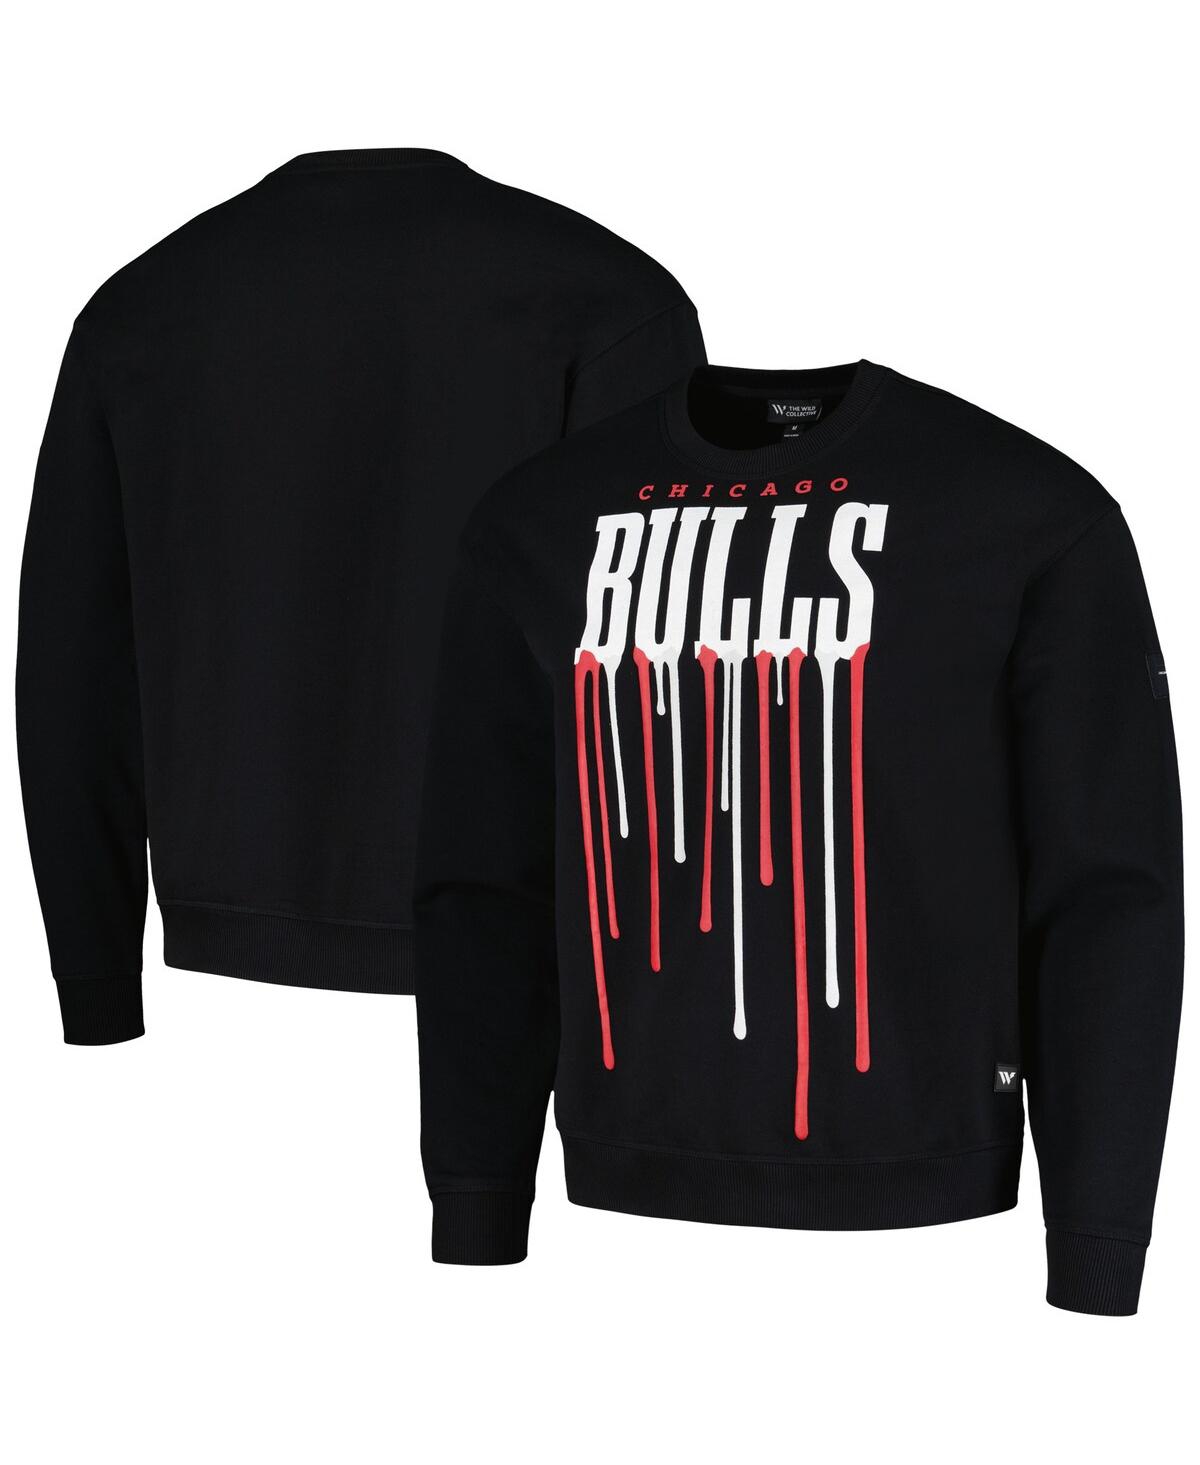 Men's and Women's The Wild Collective Black Chicago Bulls DripÂ Pullover Sweatshirt - Black